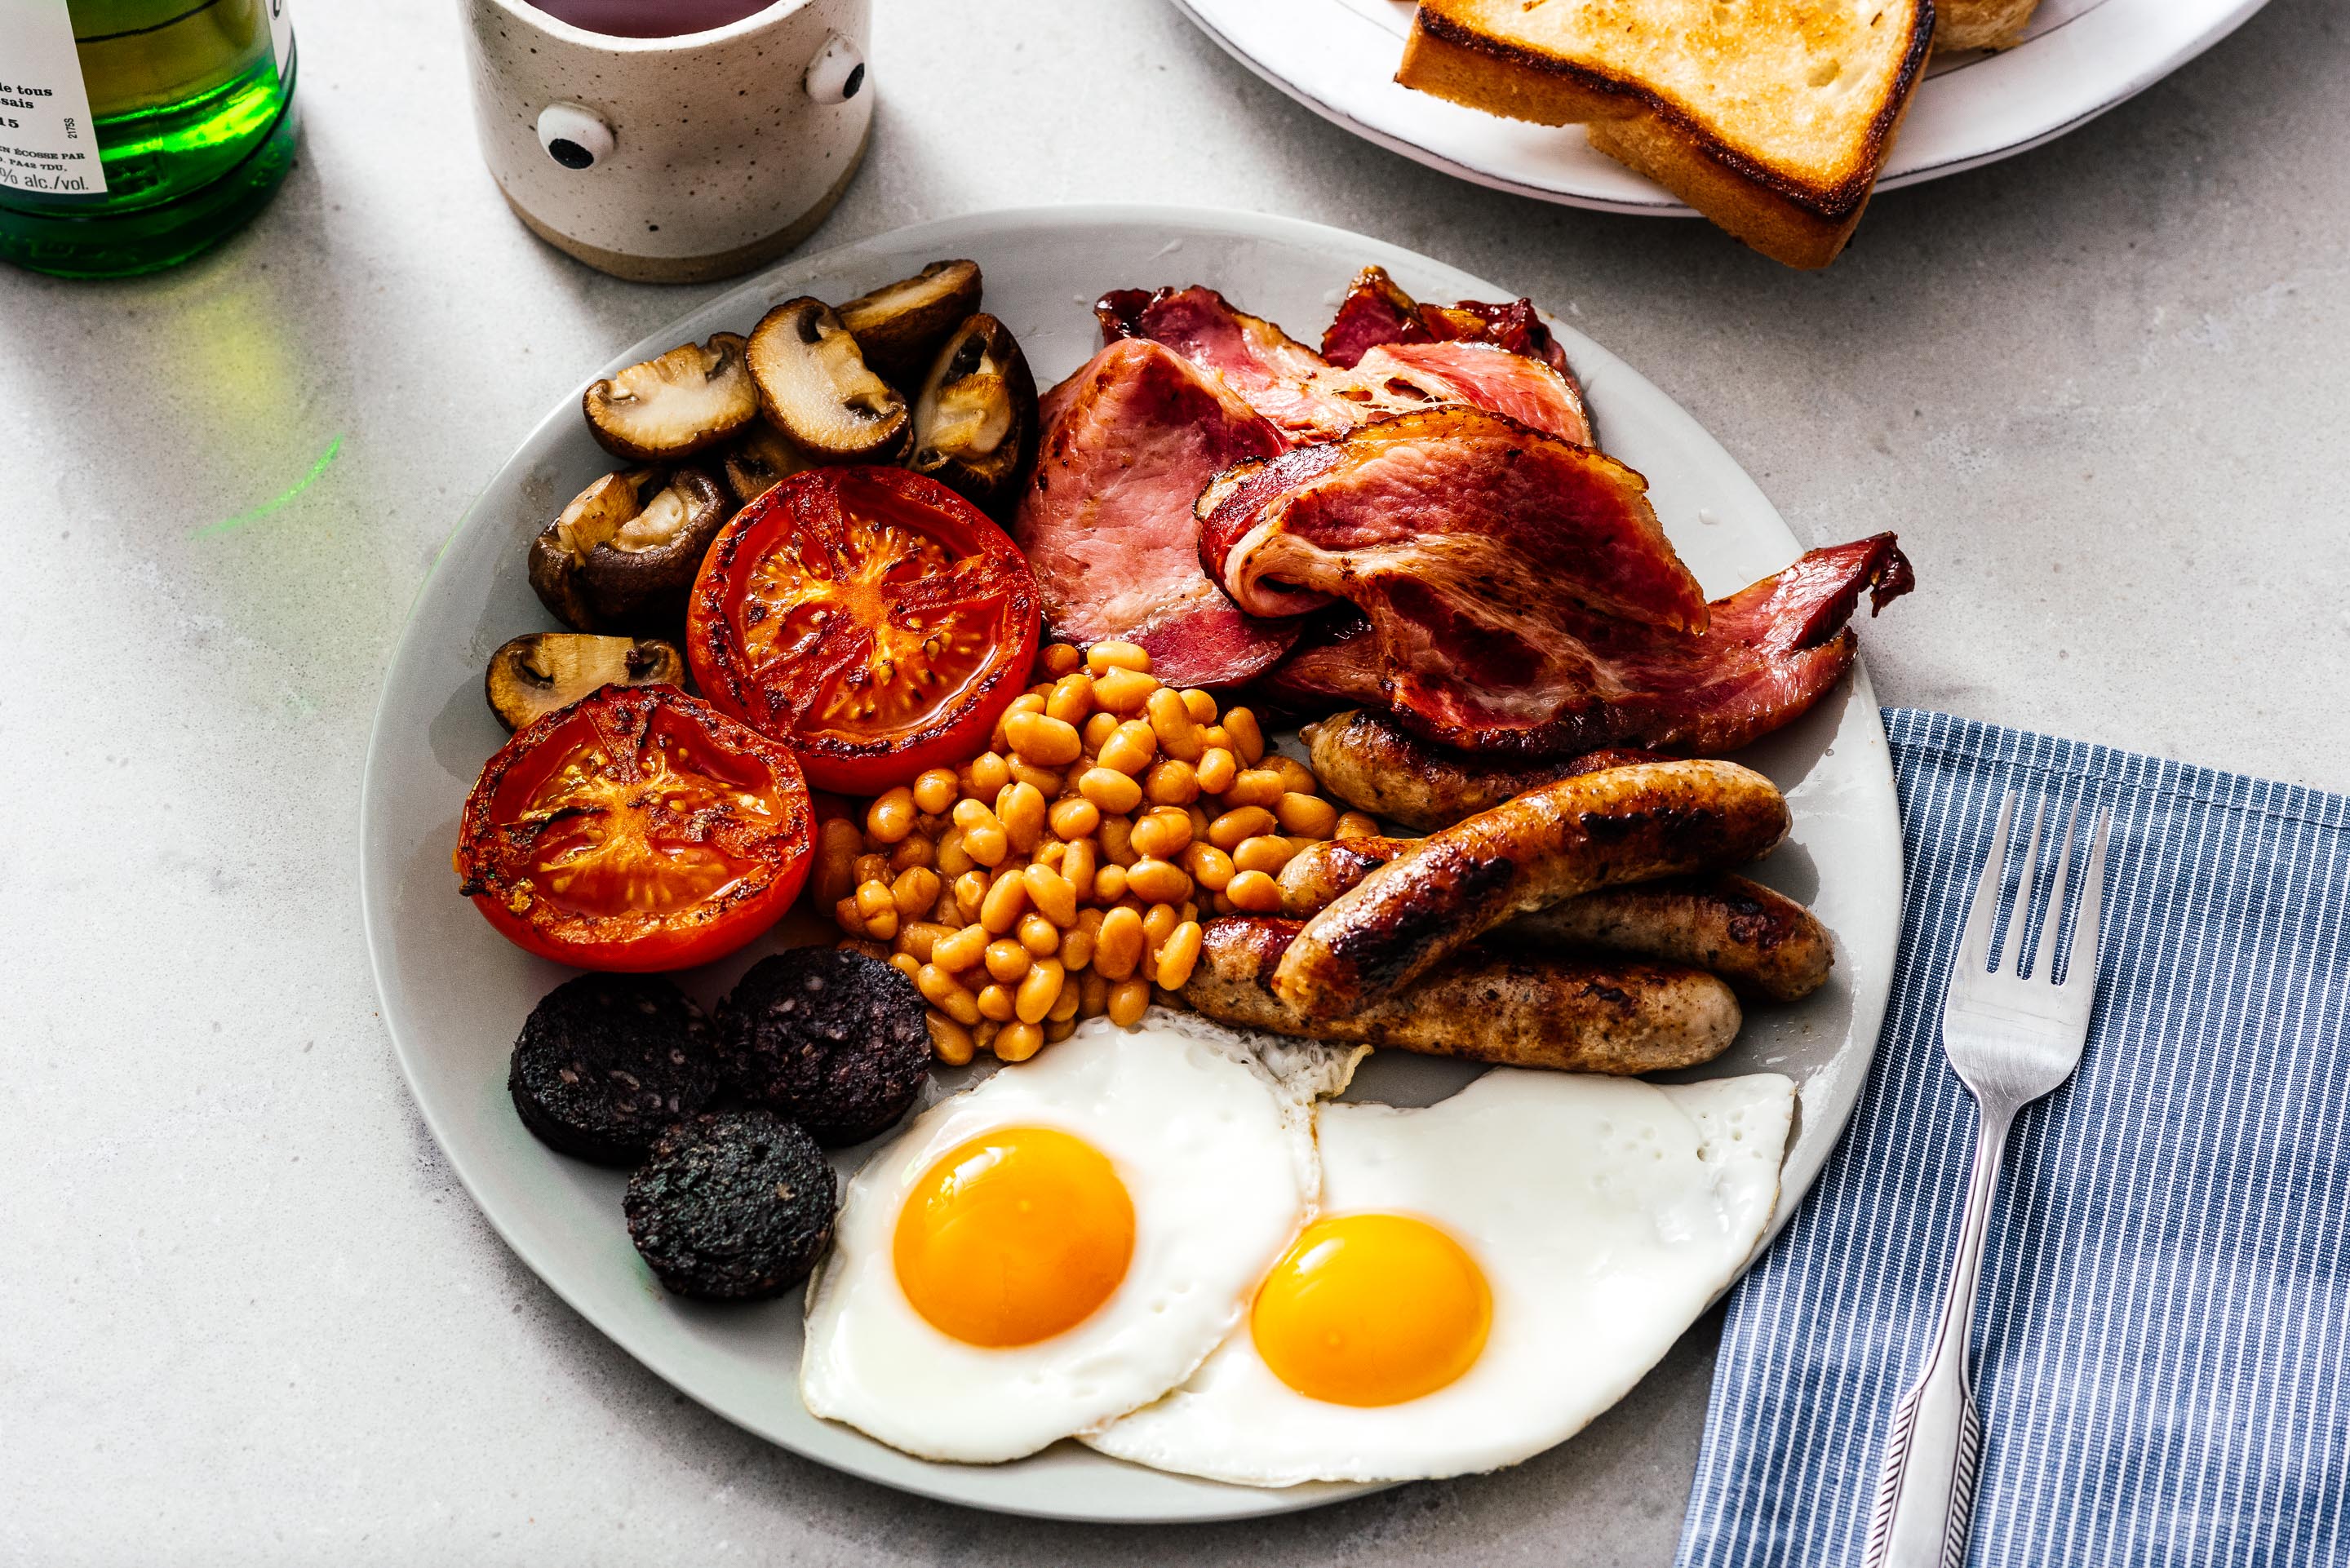 Идти завтракать на английском. Бритиш Брекфаст. Английский завтрак Британия. Full English Breakfast знаменитый английский завтрак. Традиционный завтрак в Англии.